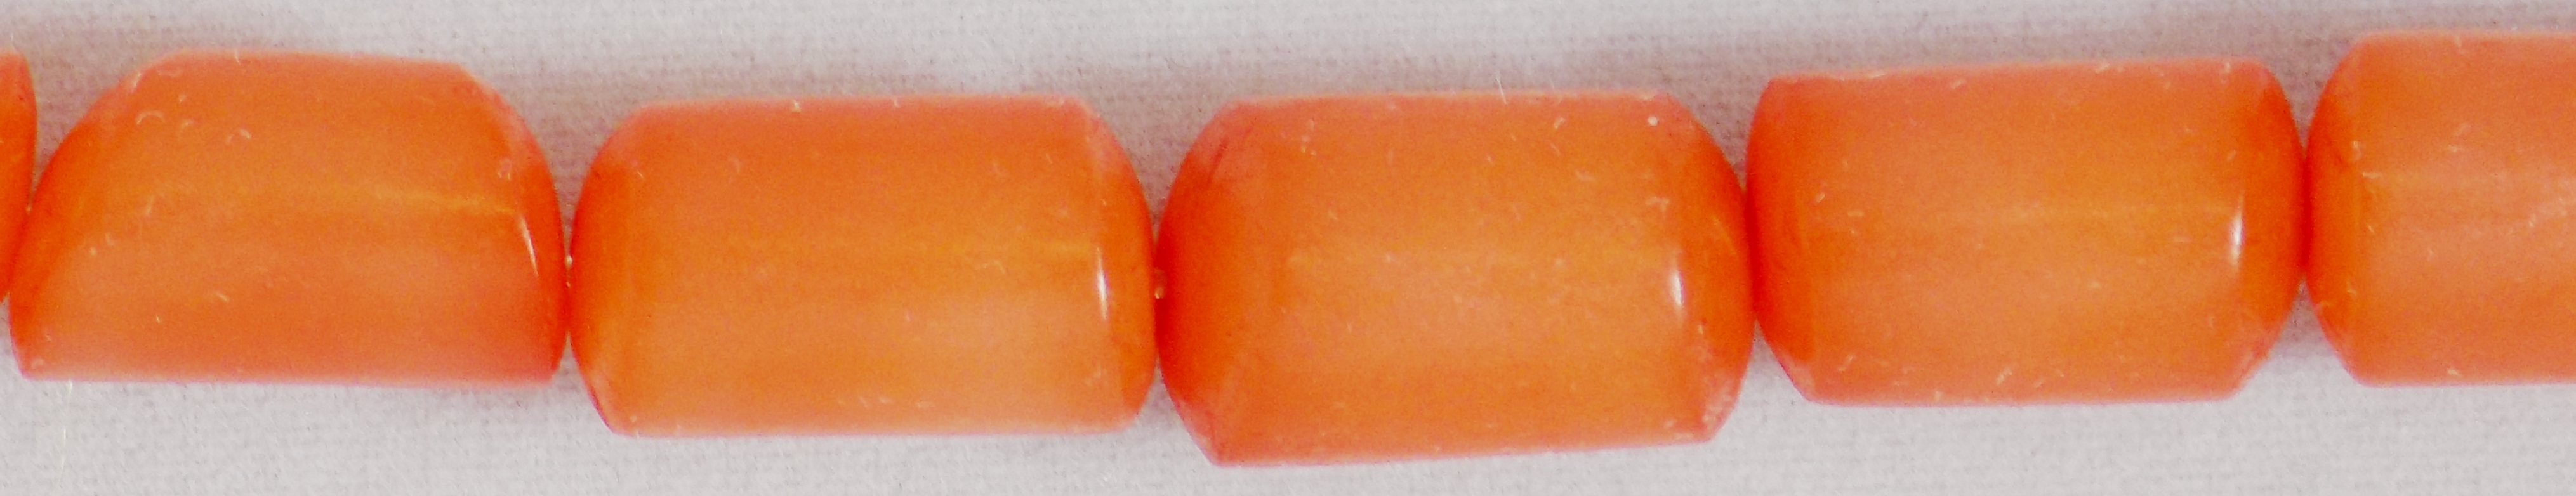 Buri seed tube 8x12mm dyed orange